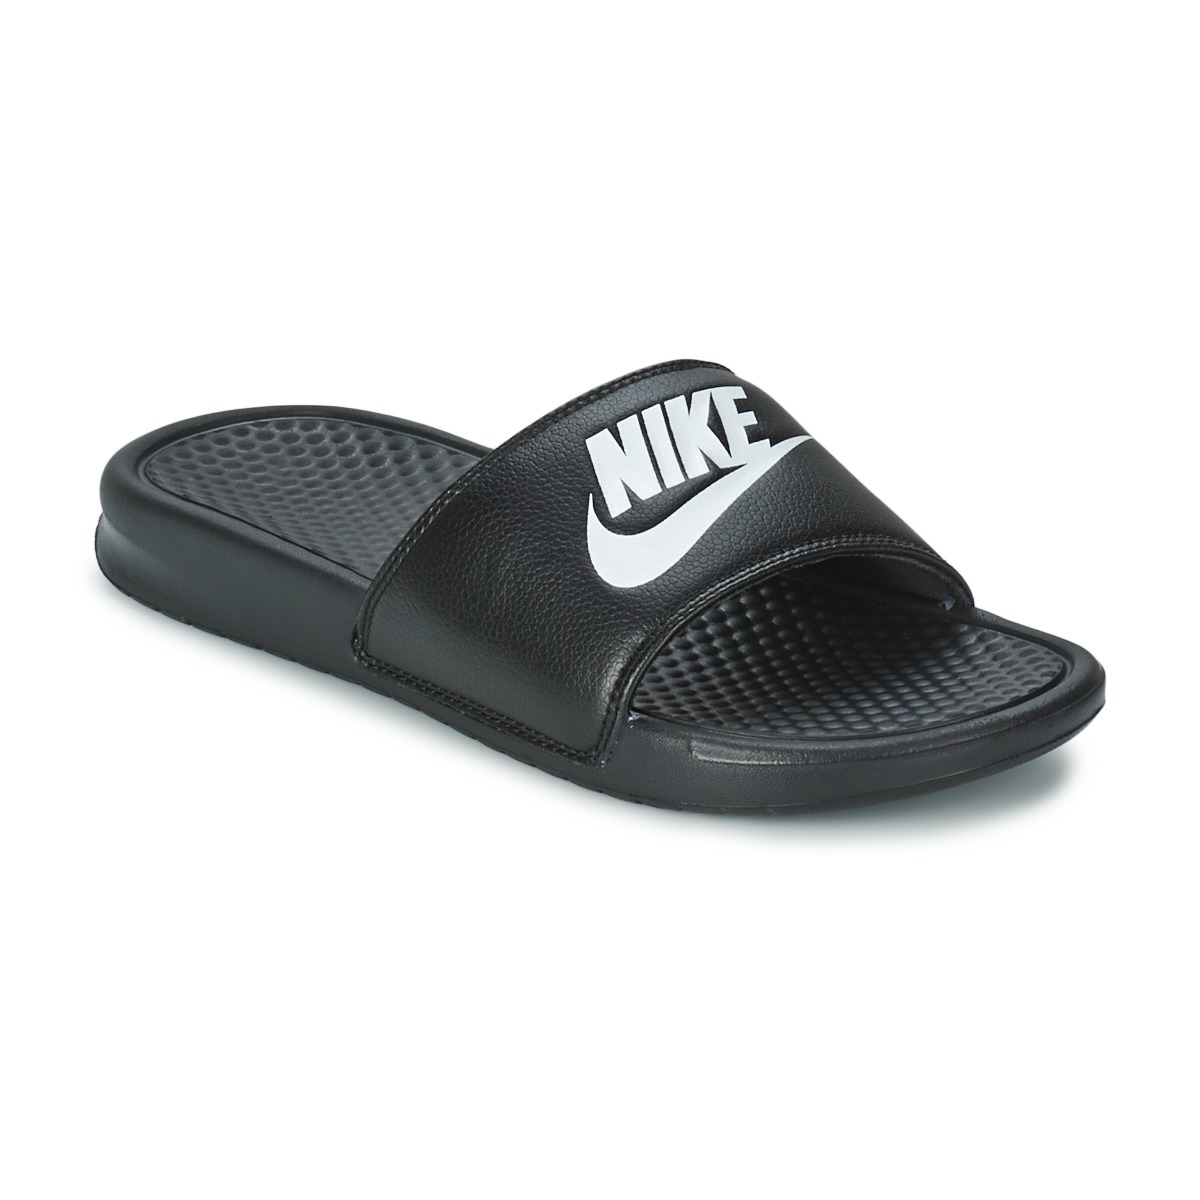 Nike BENASSI JUST DO IT Noir - Chaussures Claquettes Homme 27,65 €